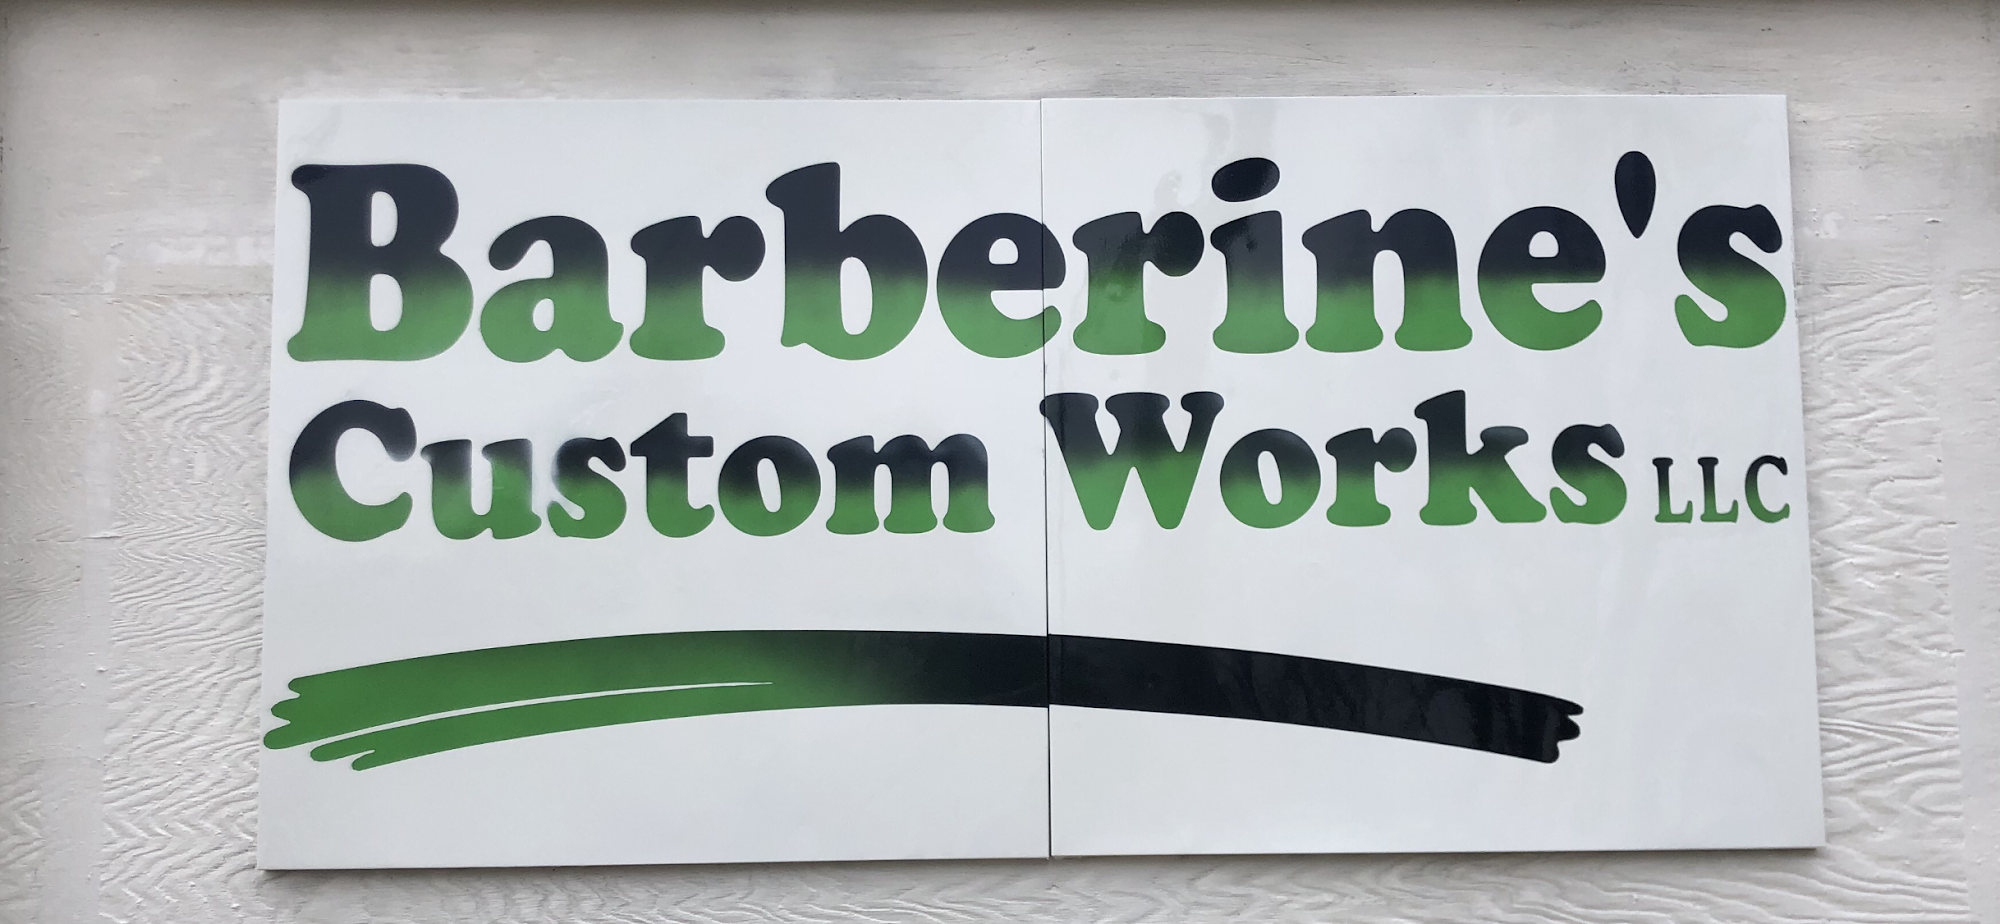 Barberine’s Custom Works LLC